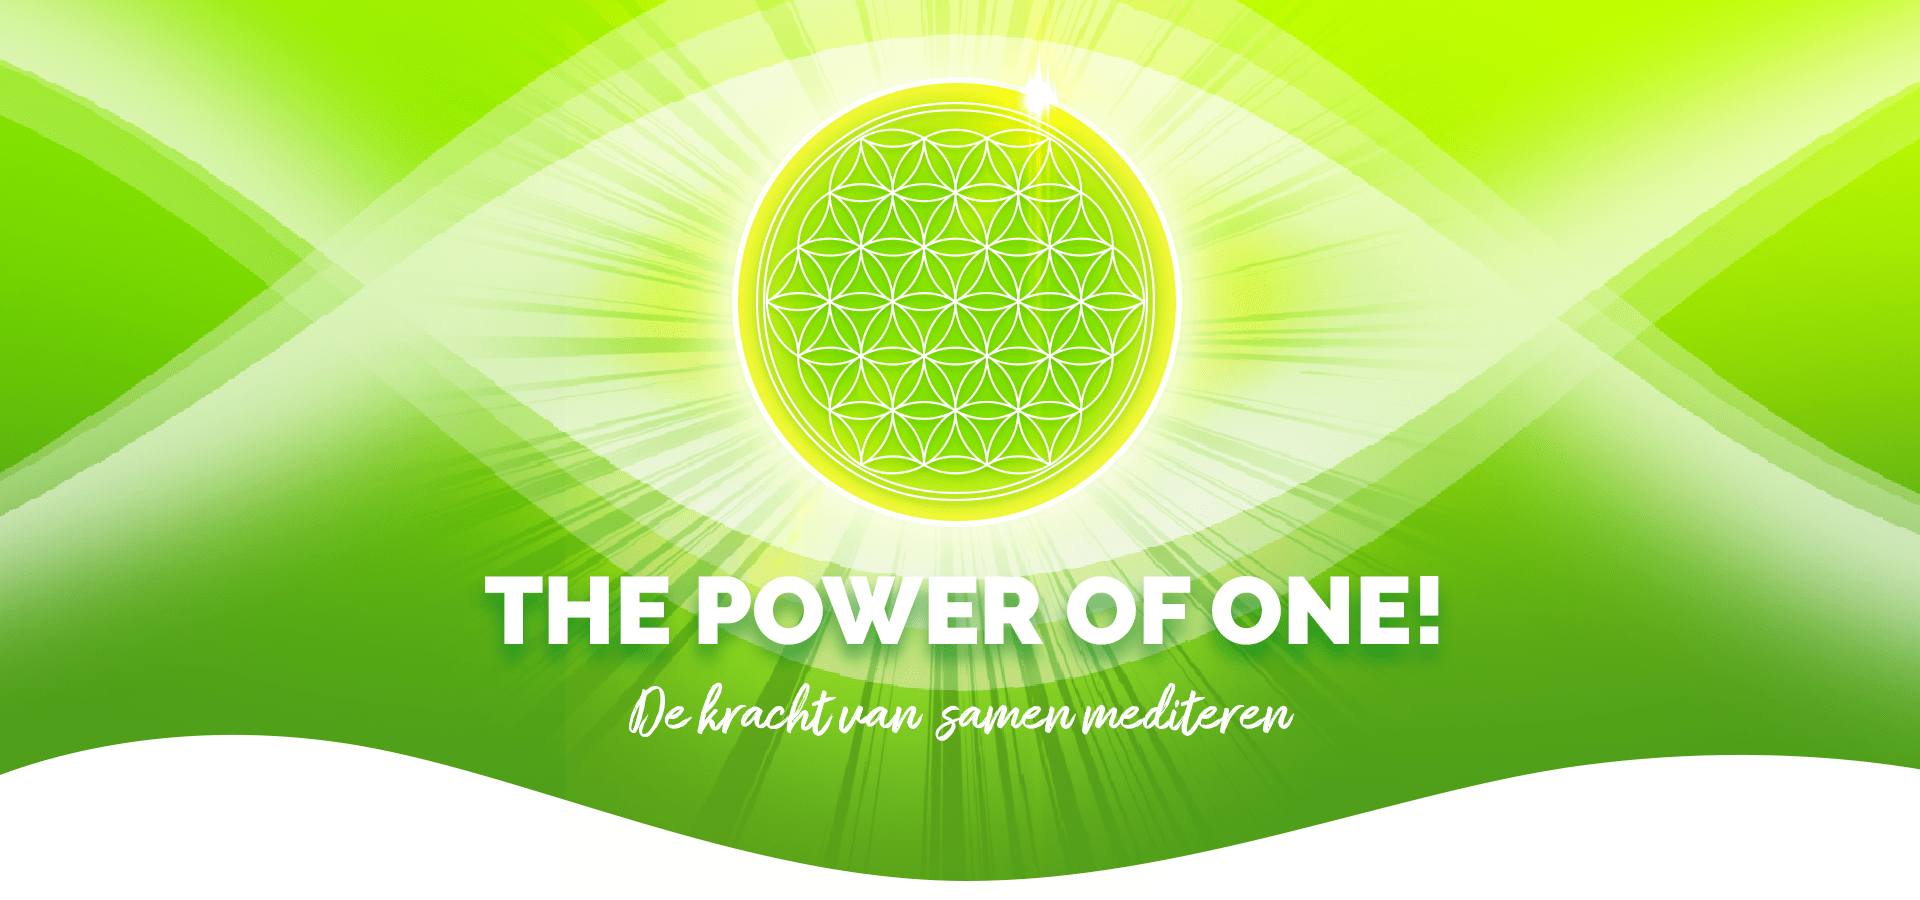 Power of one mediteren